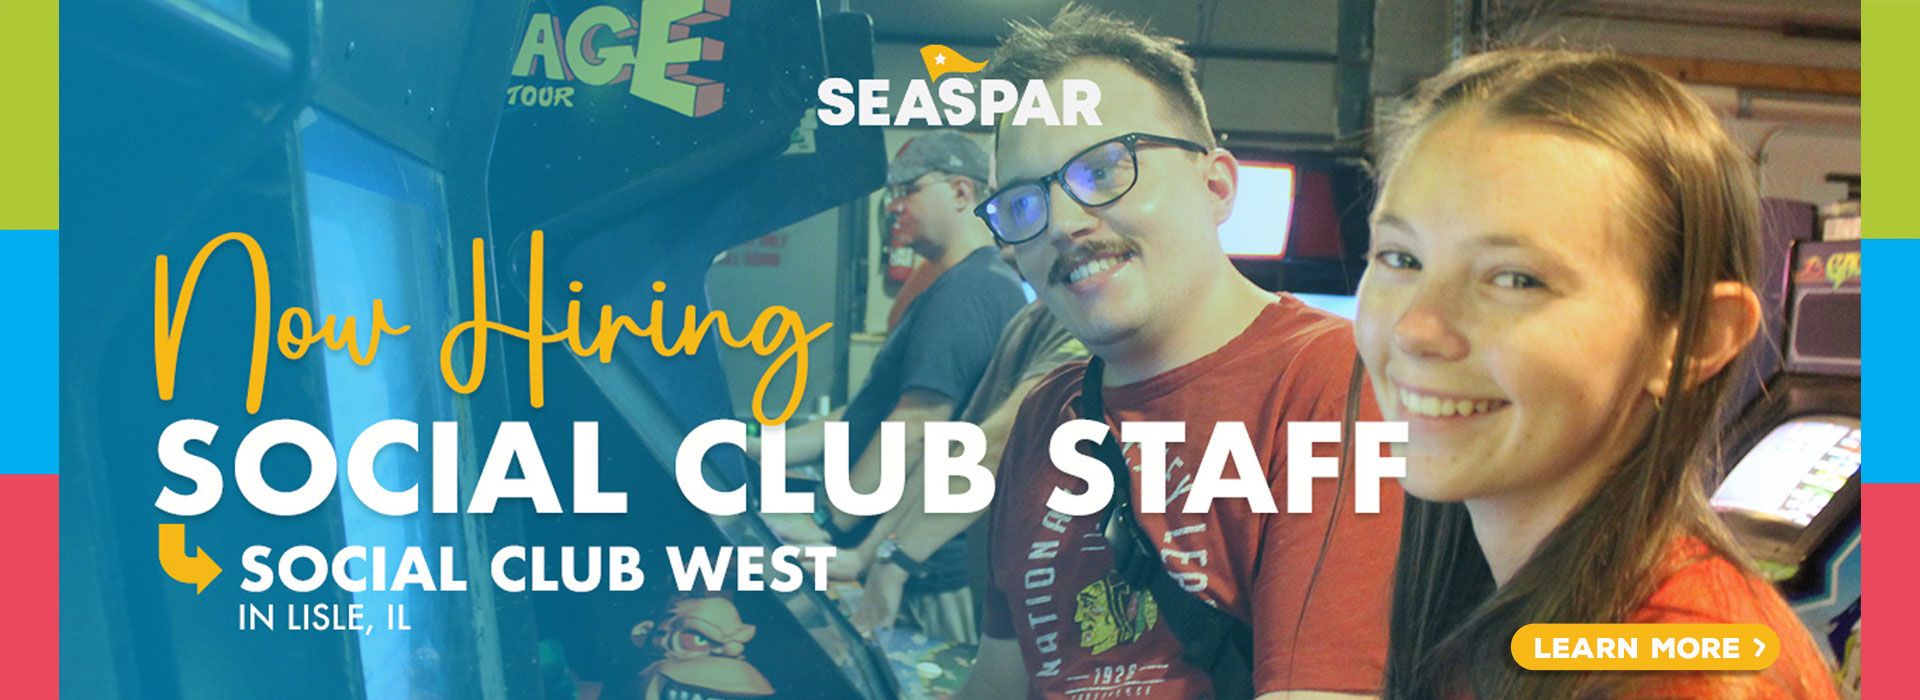 SEASPAR is Hiring Social Club Staff